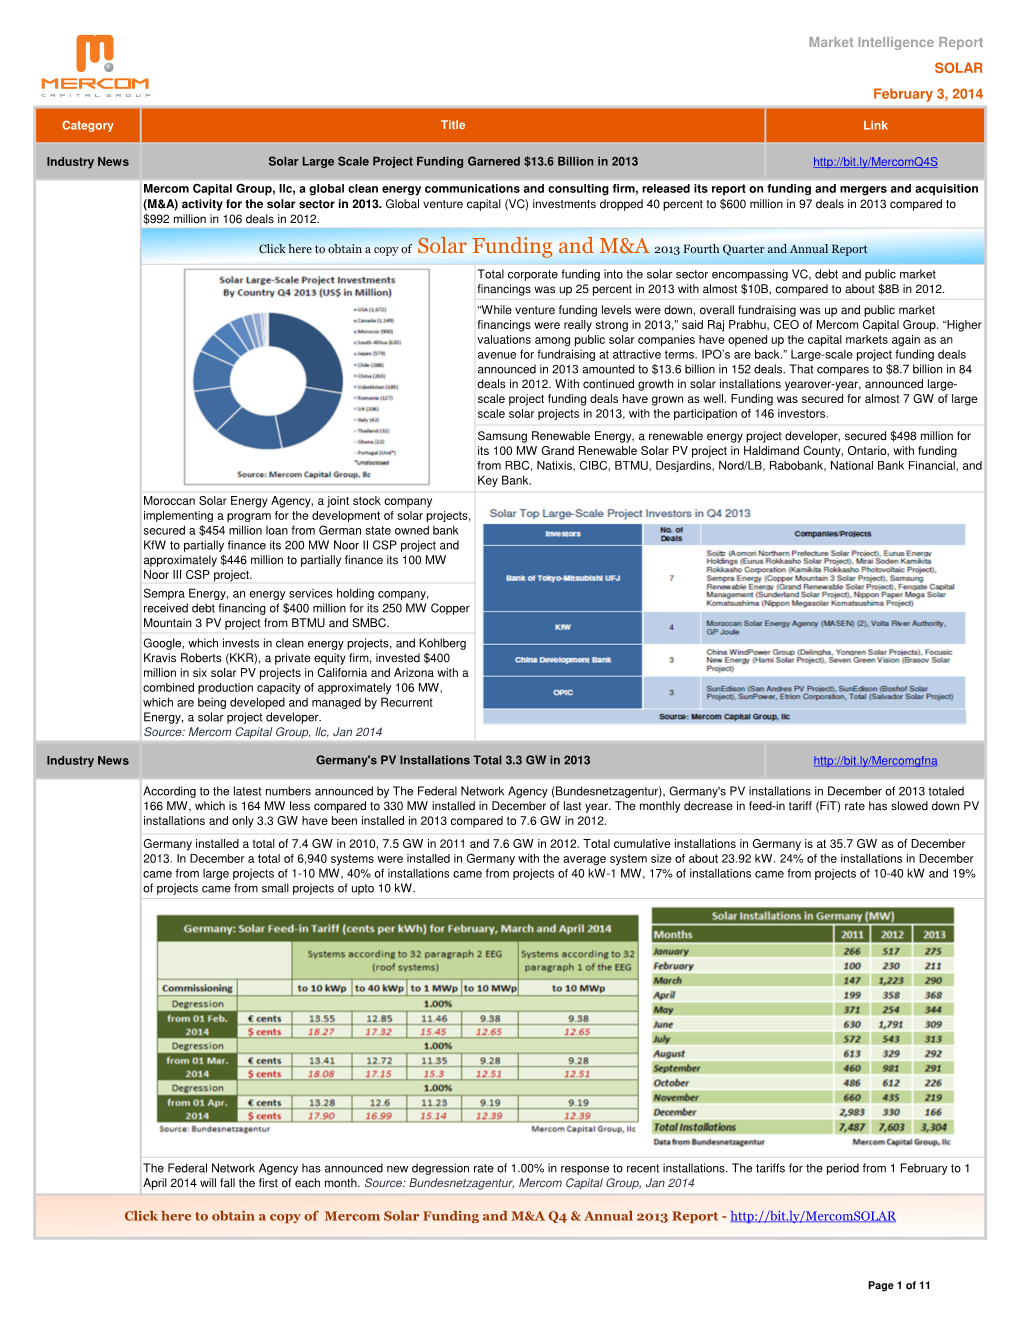 Market Intelligence Report SOLAR February 3, 2014